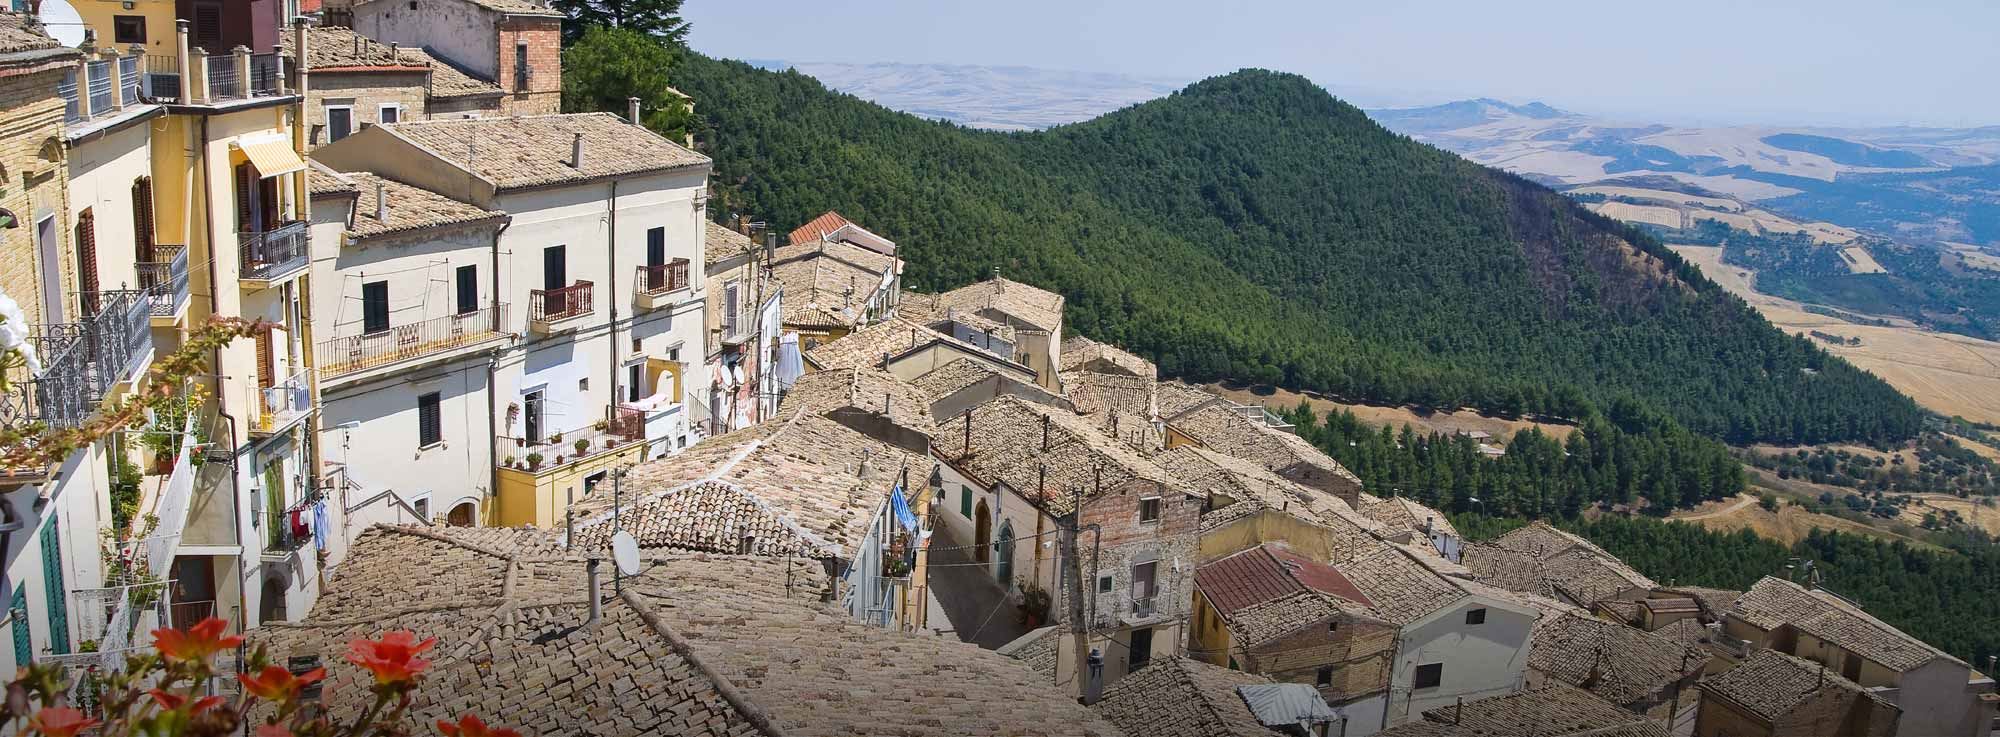 Sant'Agata di Puglia